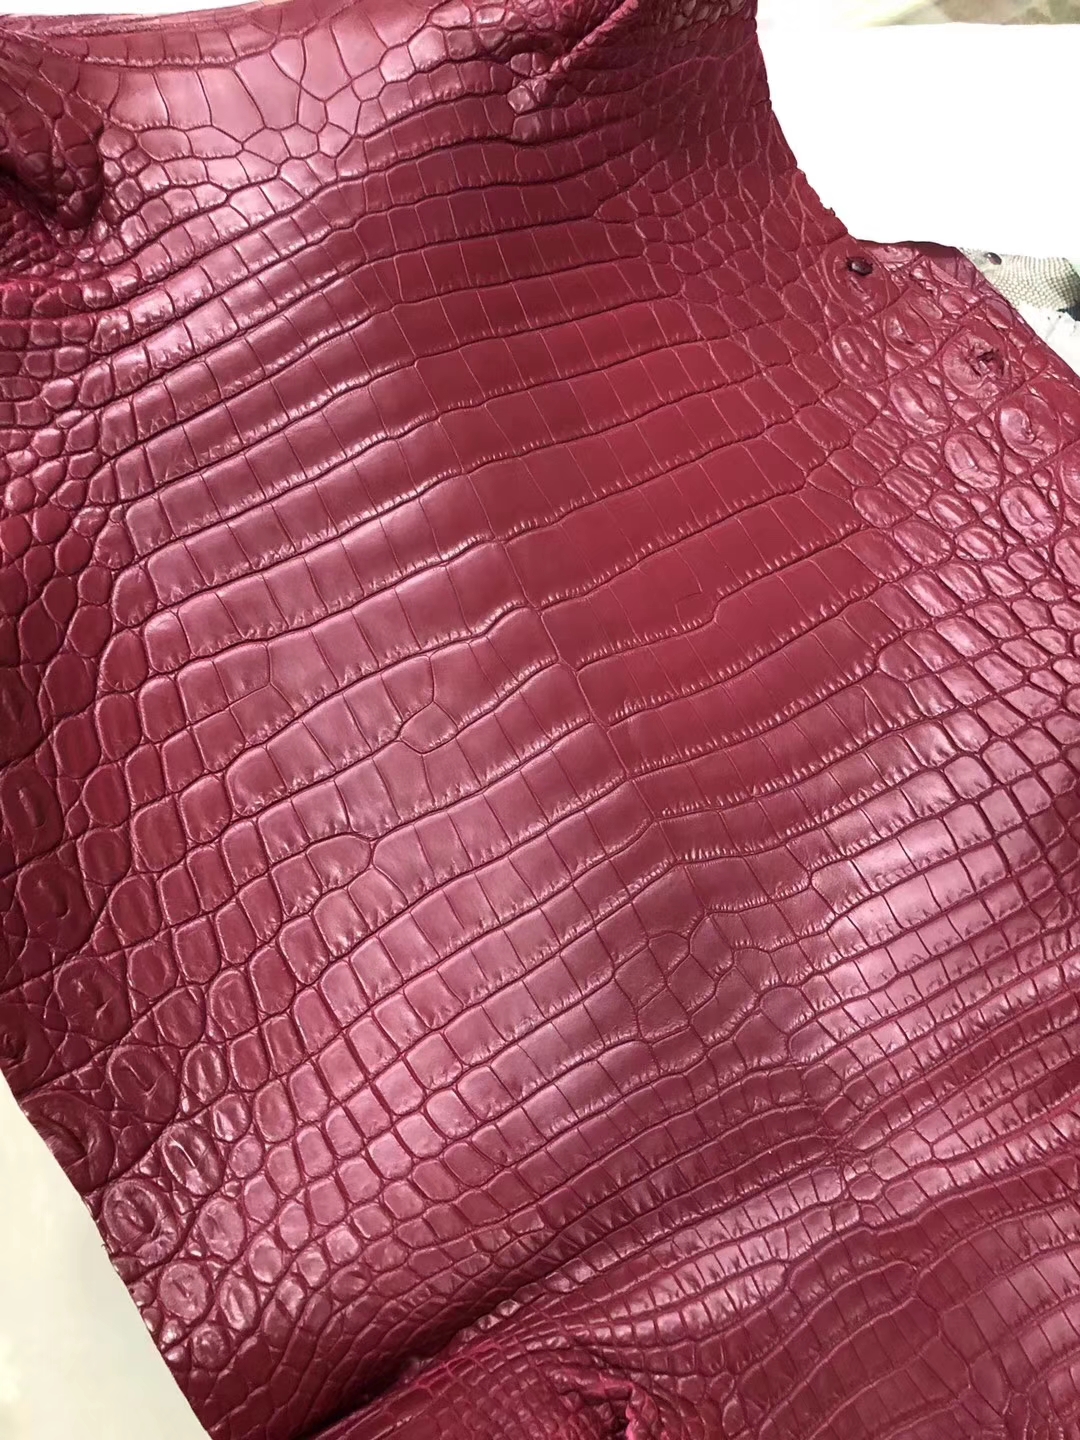 New Arrival Hermes Multicolor Matt Crocodile Leather Can Order Lindy/Birkin Bag